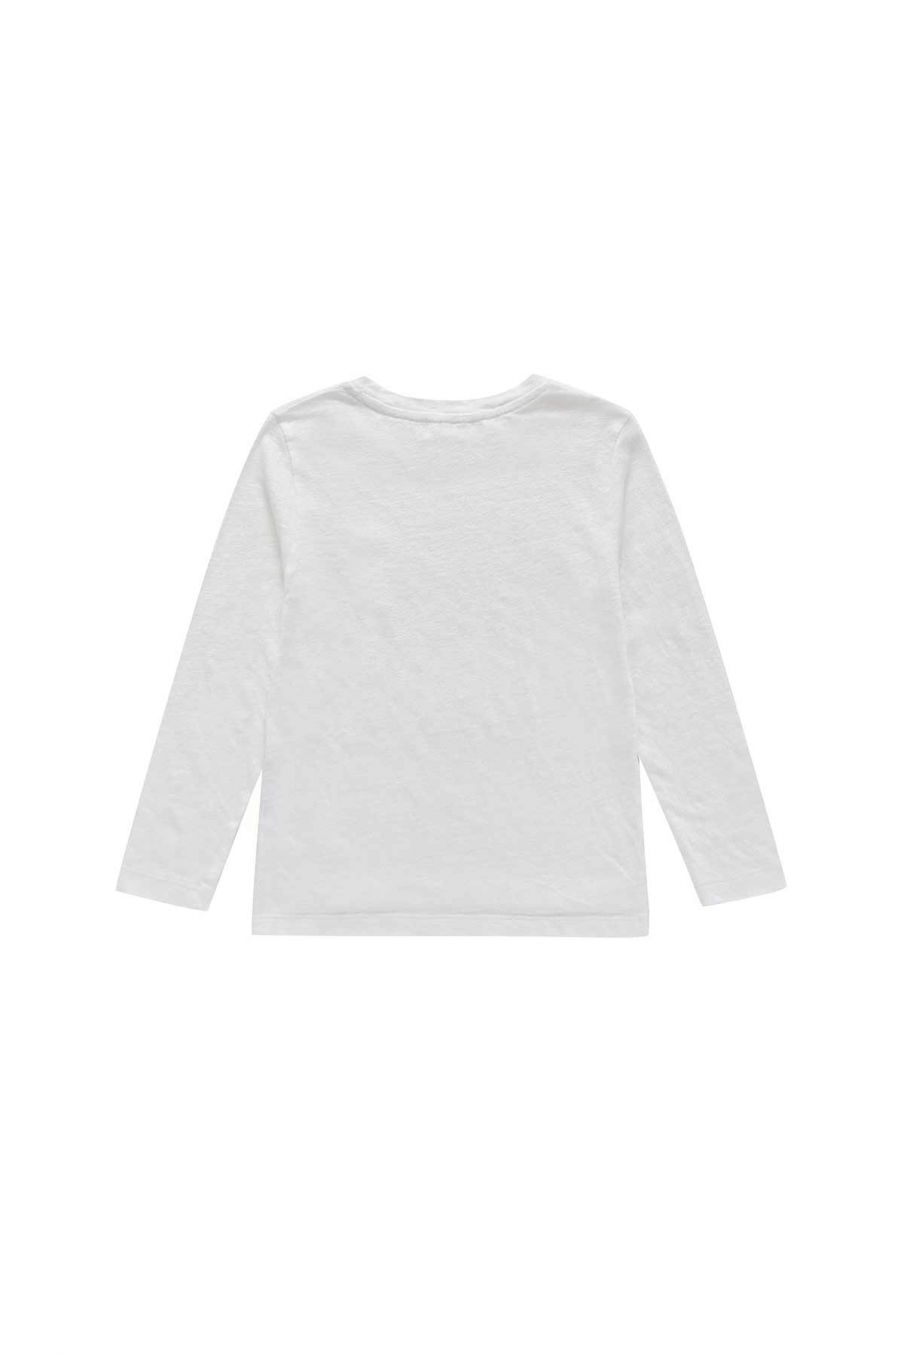 garccon-t-shirt-stano-white